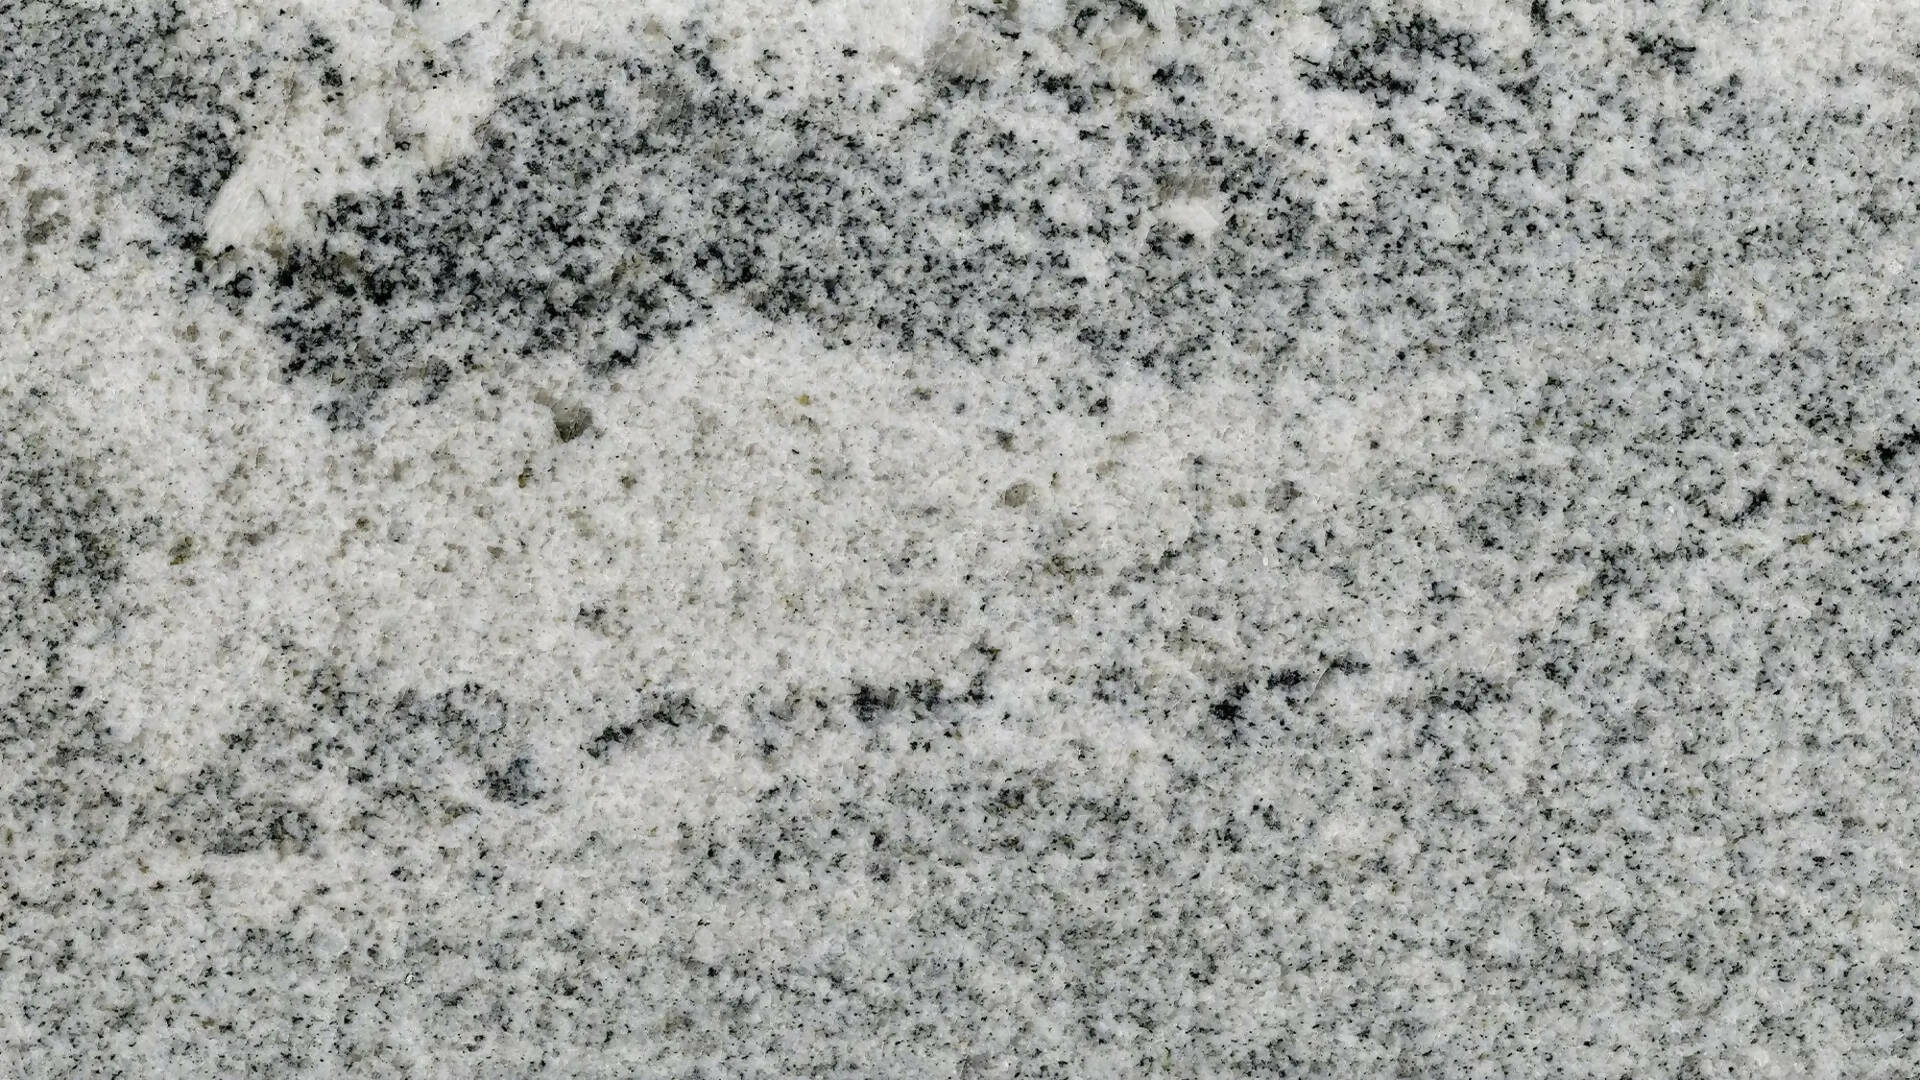 WISKONT WHITE GRANITE,Granite,Brachot,www.work-tops.com